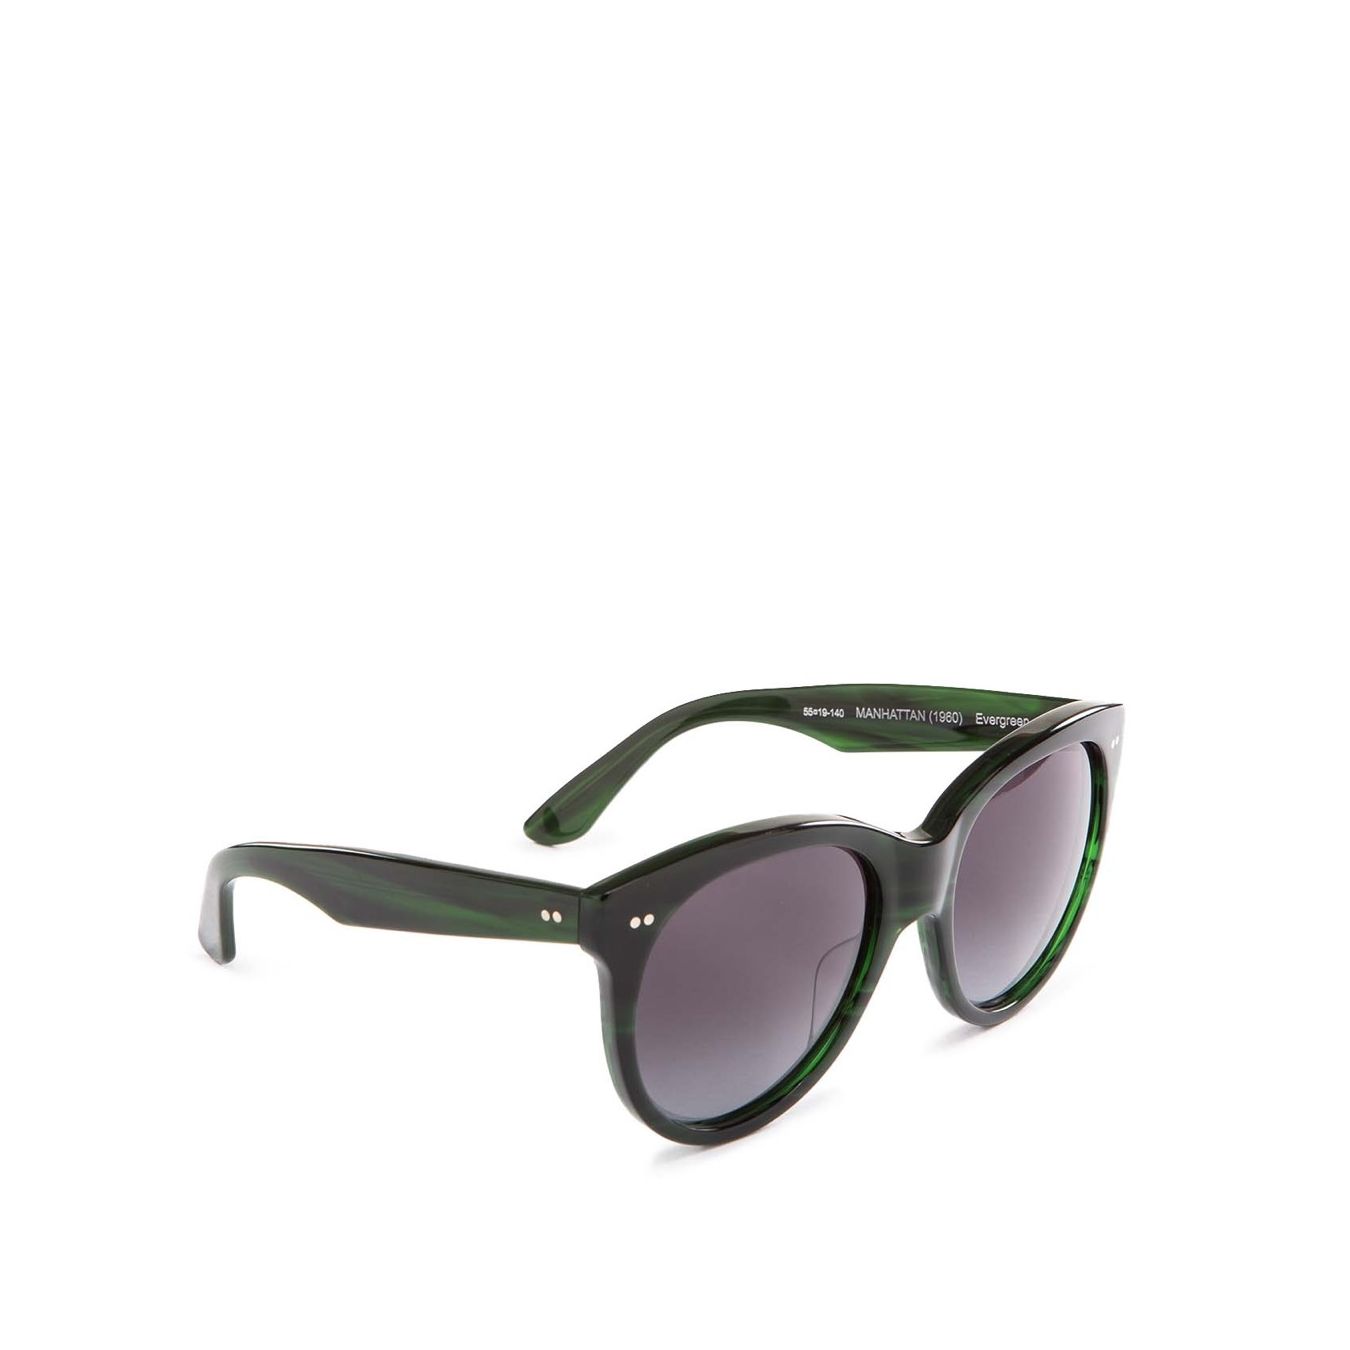 occhiali da sole oliver goldsmith verdi